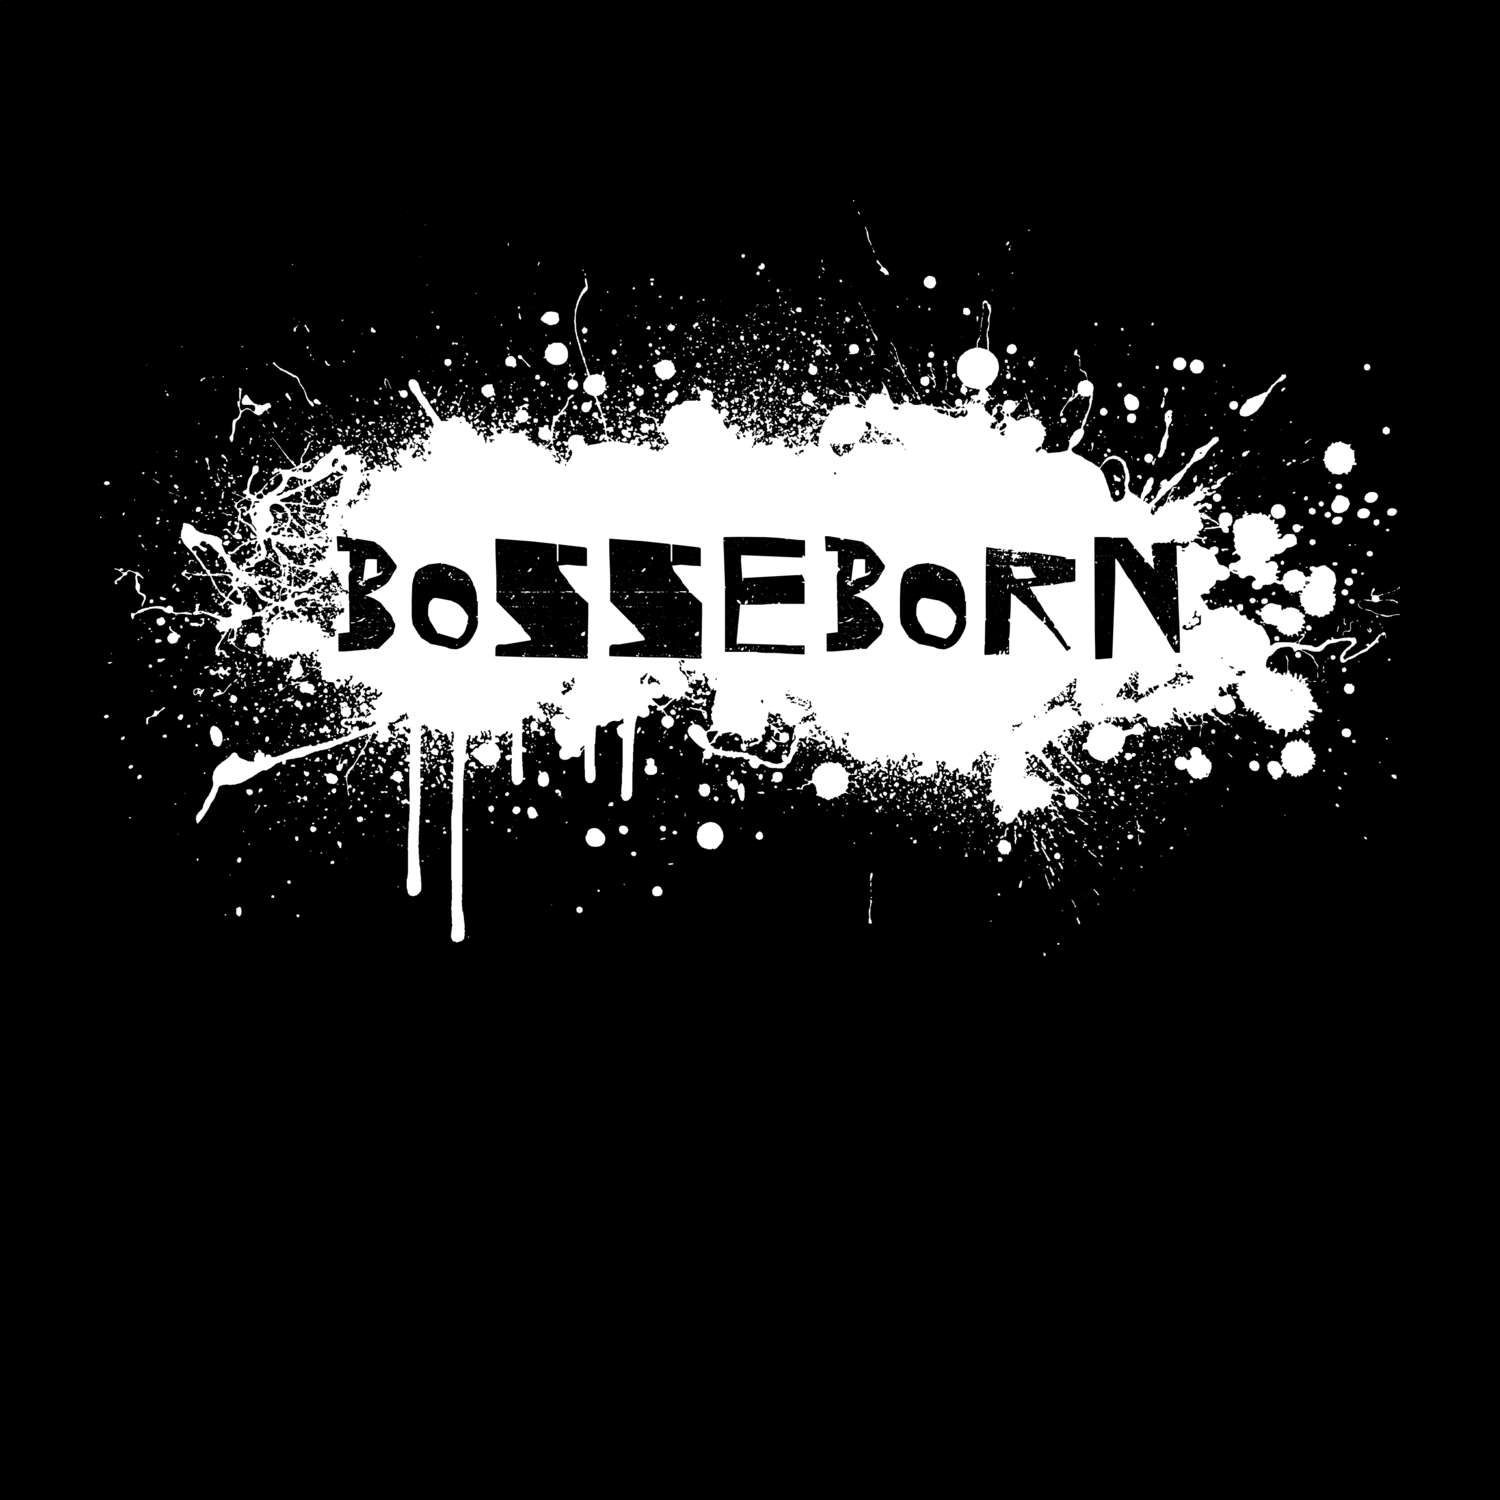 Bosseborn T-Shirt »Paint Splash Punk«